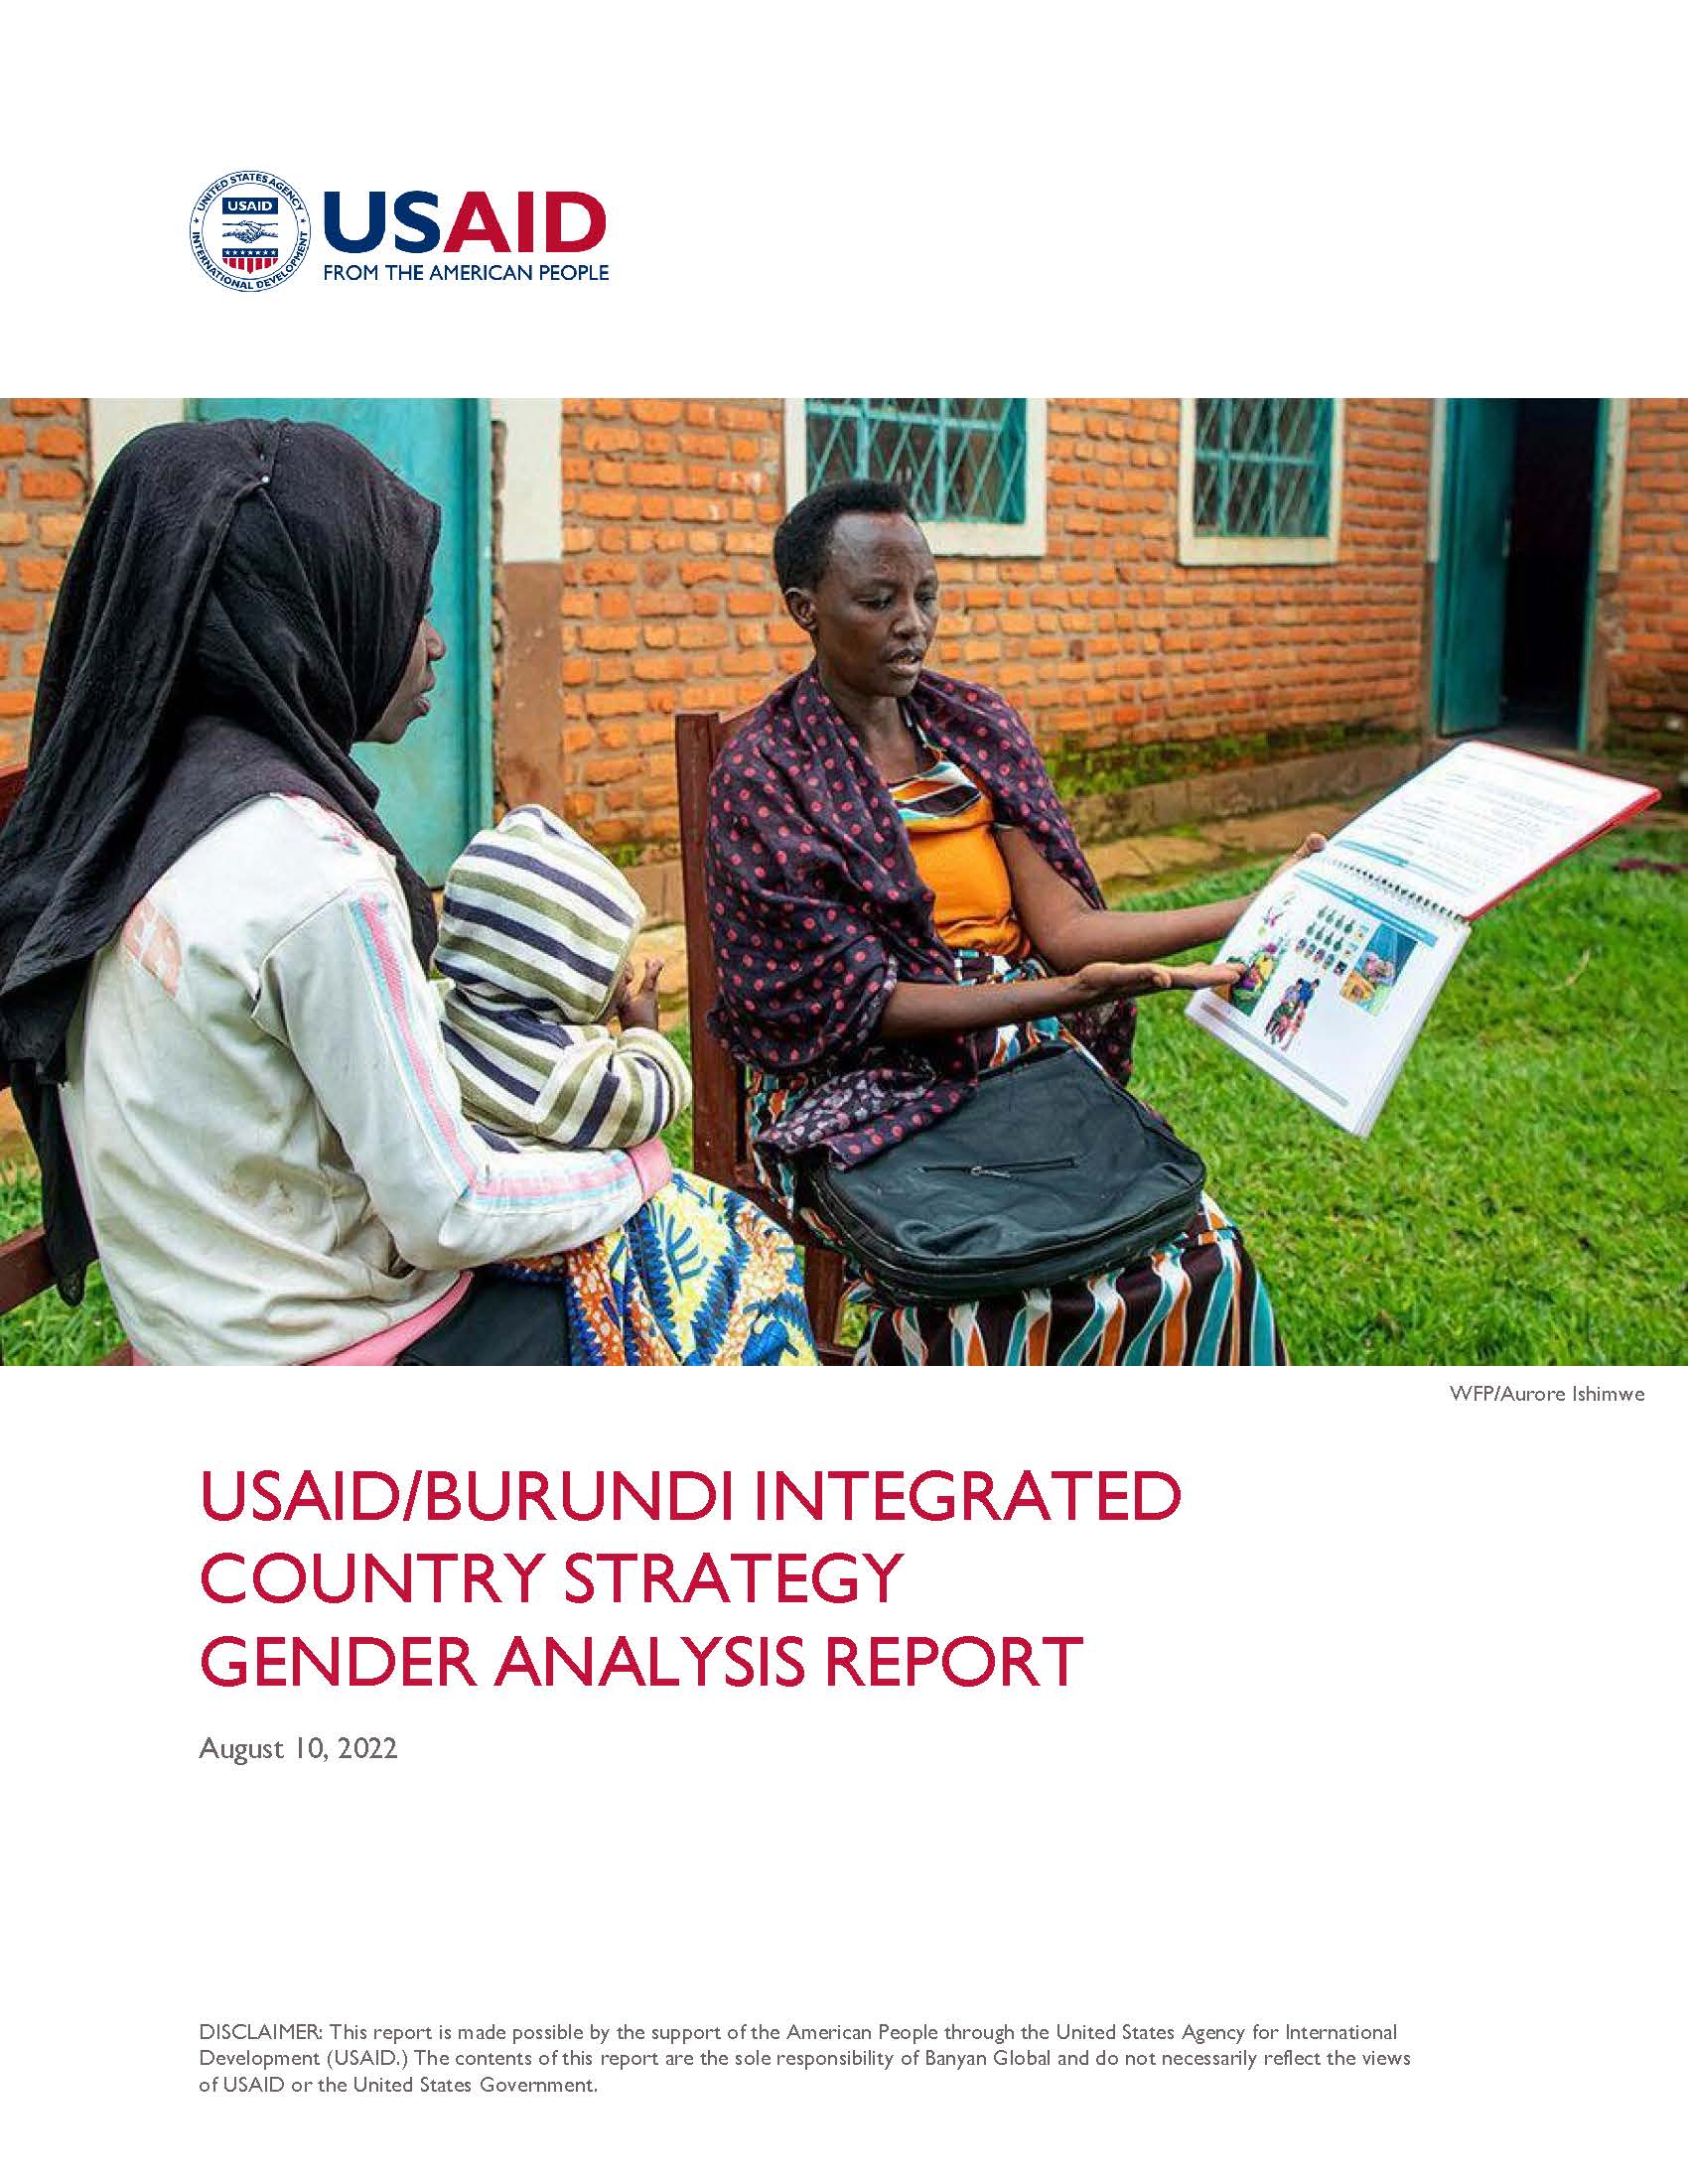 USAID/Burundi Integrated Country Strategy Gender Analysis Report